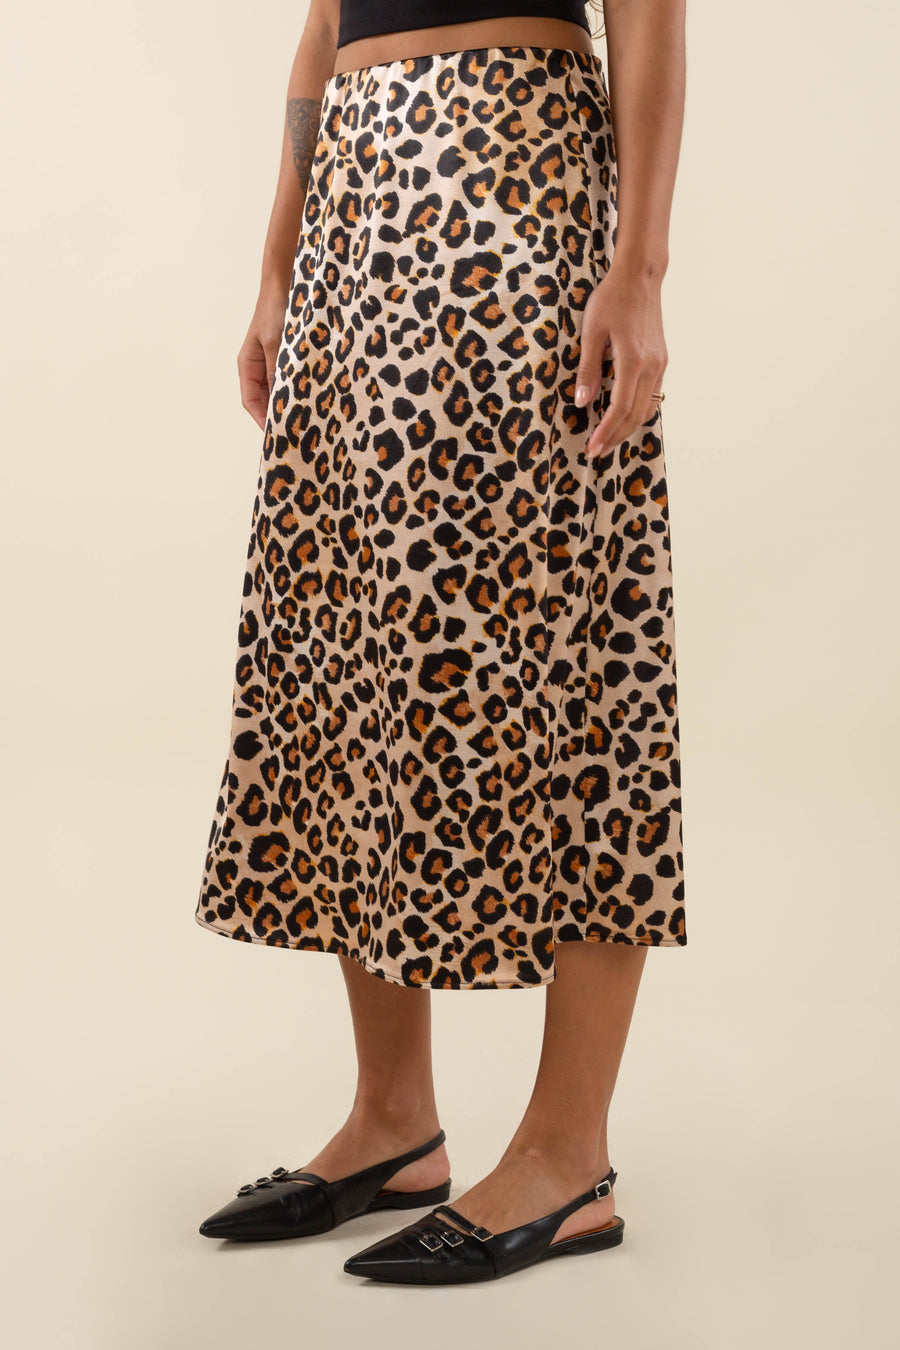 Satin Leopard Midi Skirt skirt No Less Than 